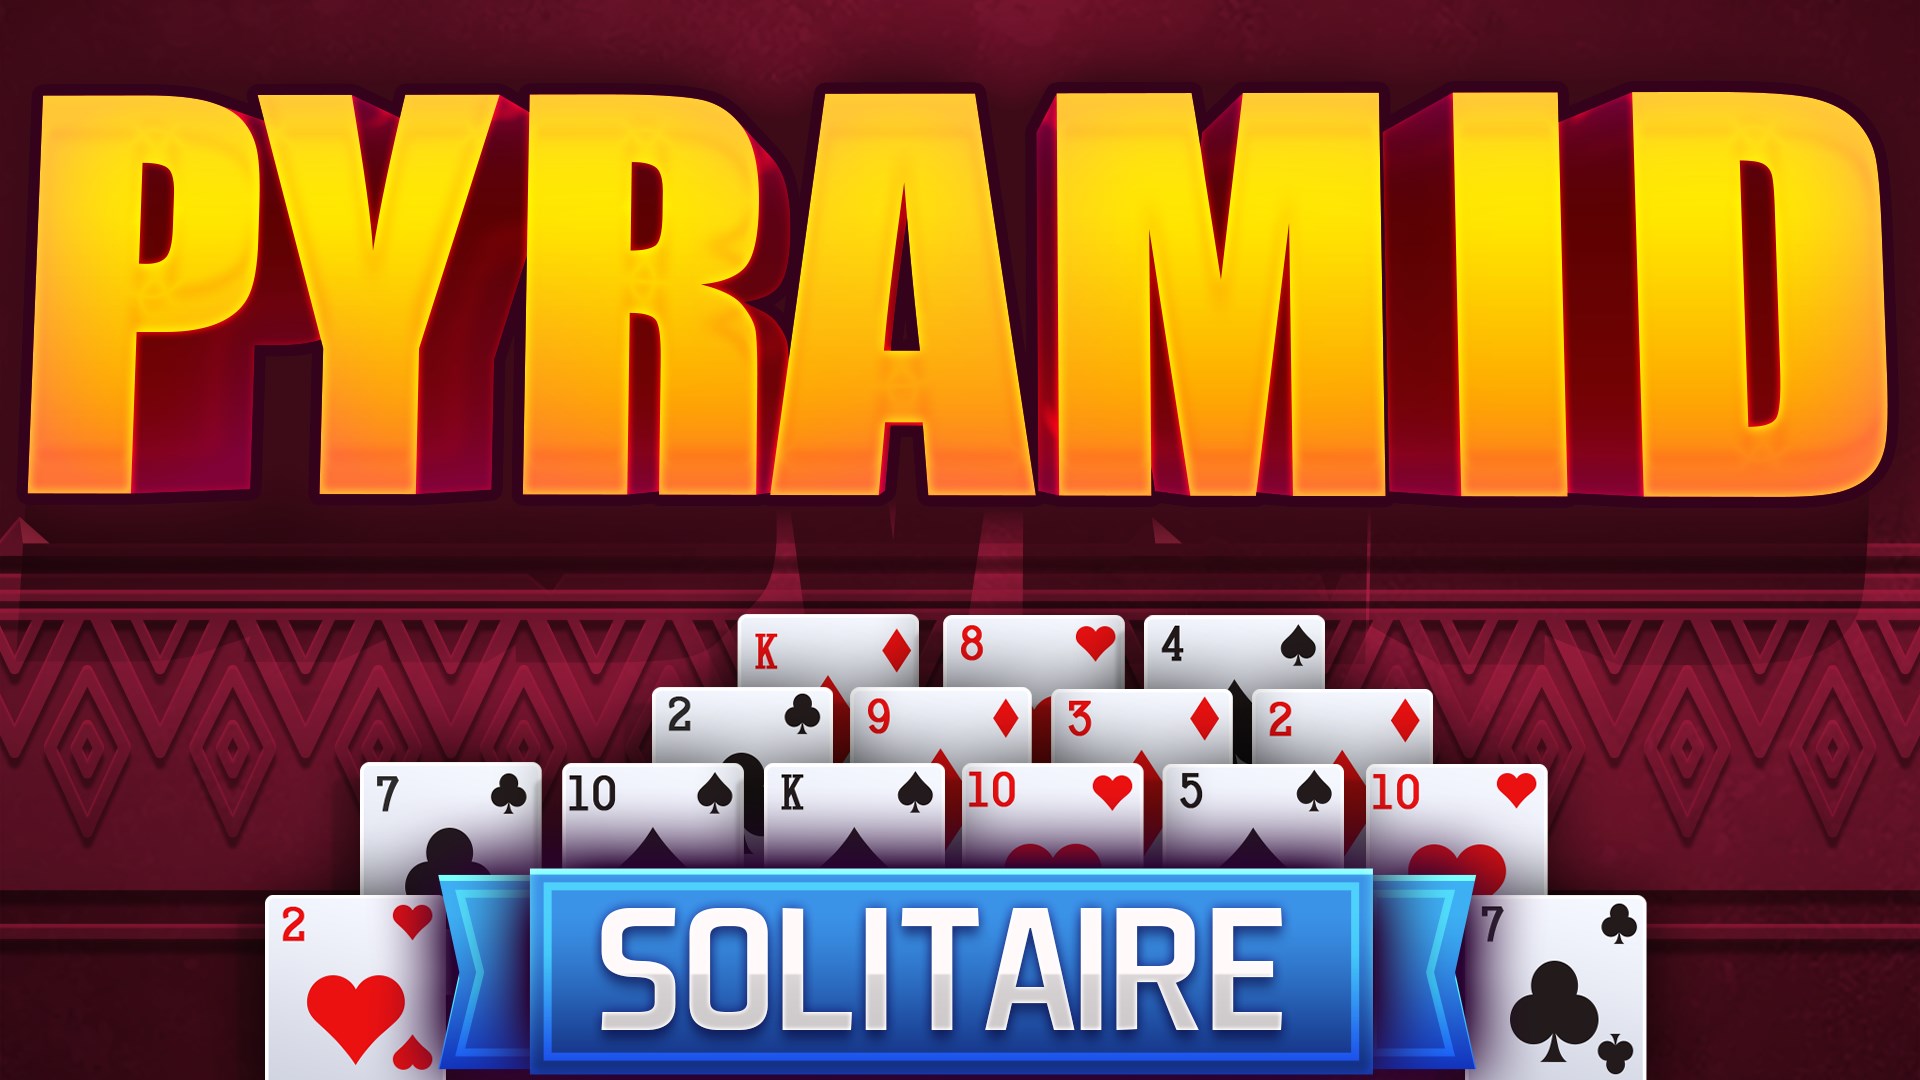 Get Pyramid Solitaire Real Fun Card Game Microsoft Store En Gb